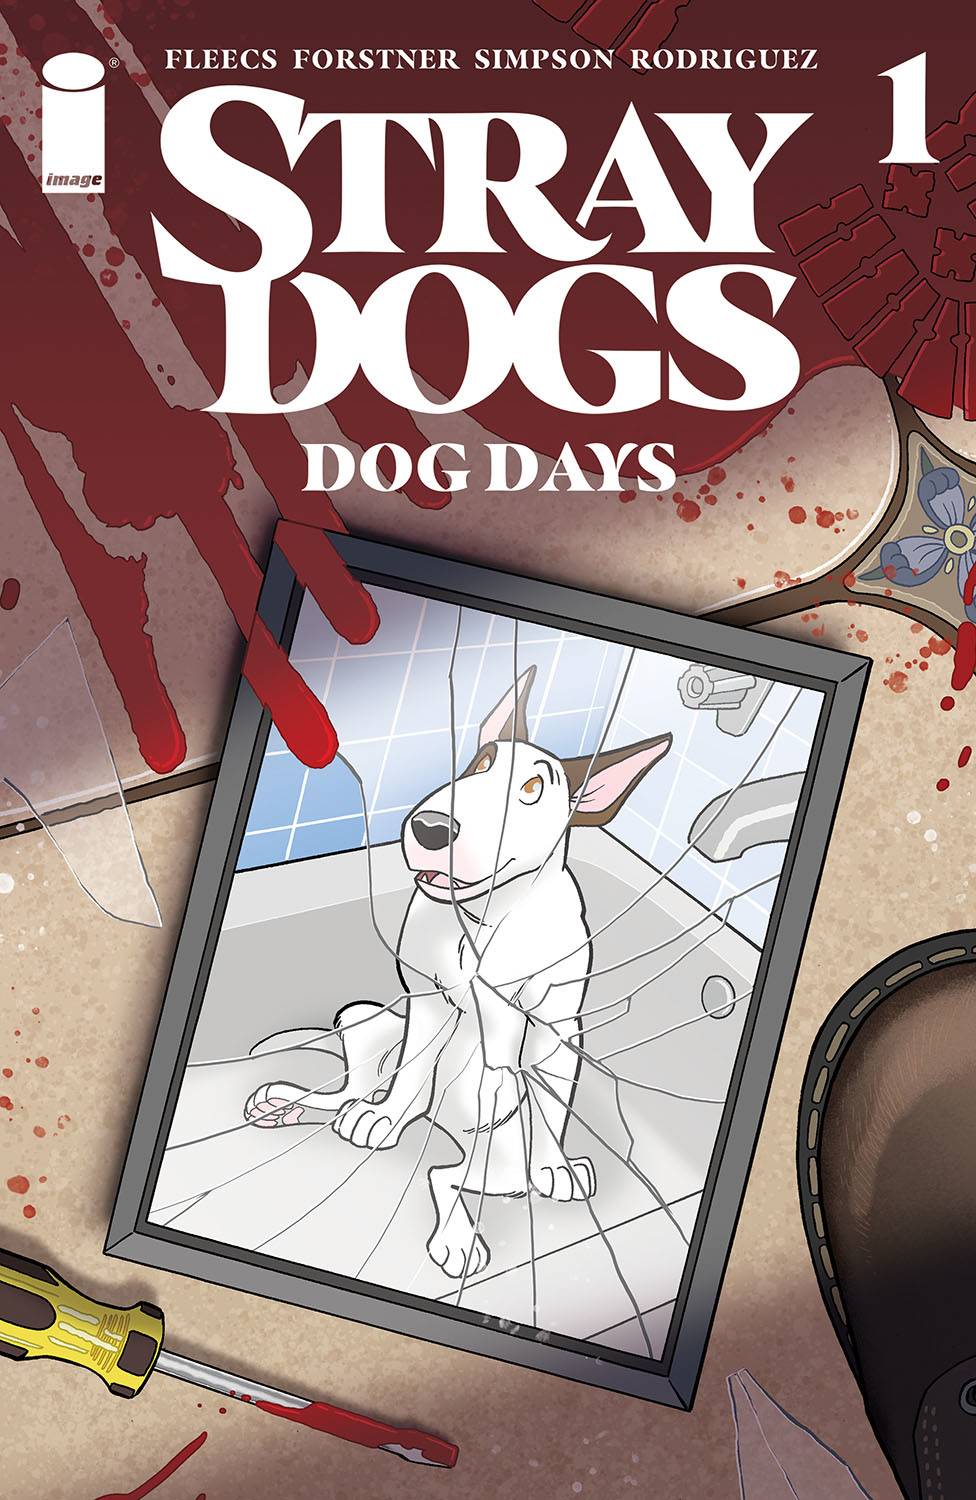 DOG DAYS' Vol.1, Dog Days Wiki